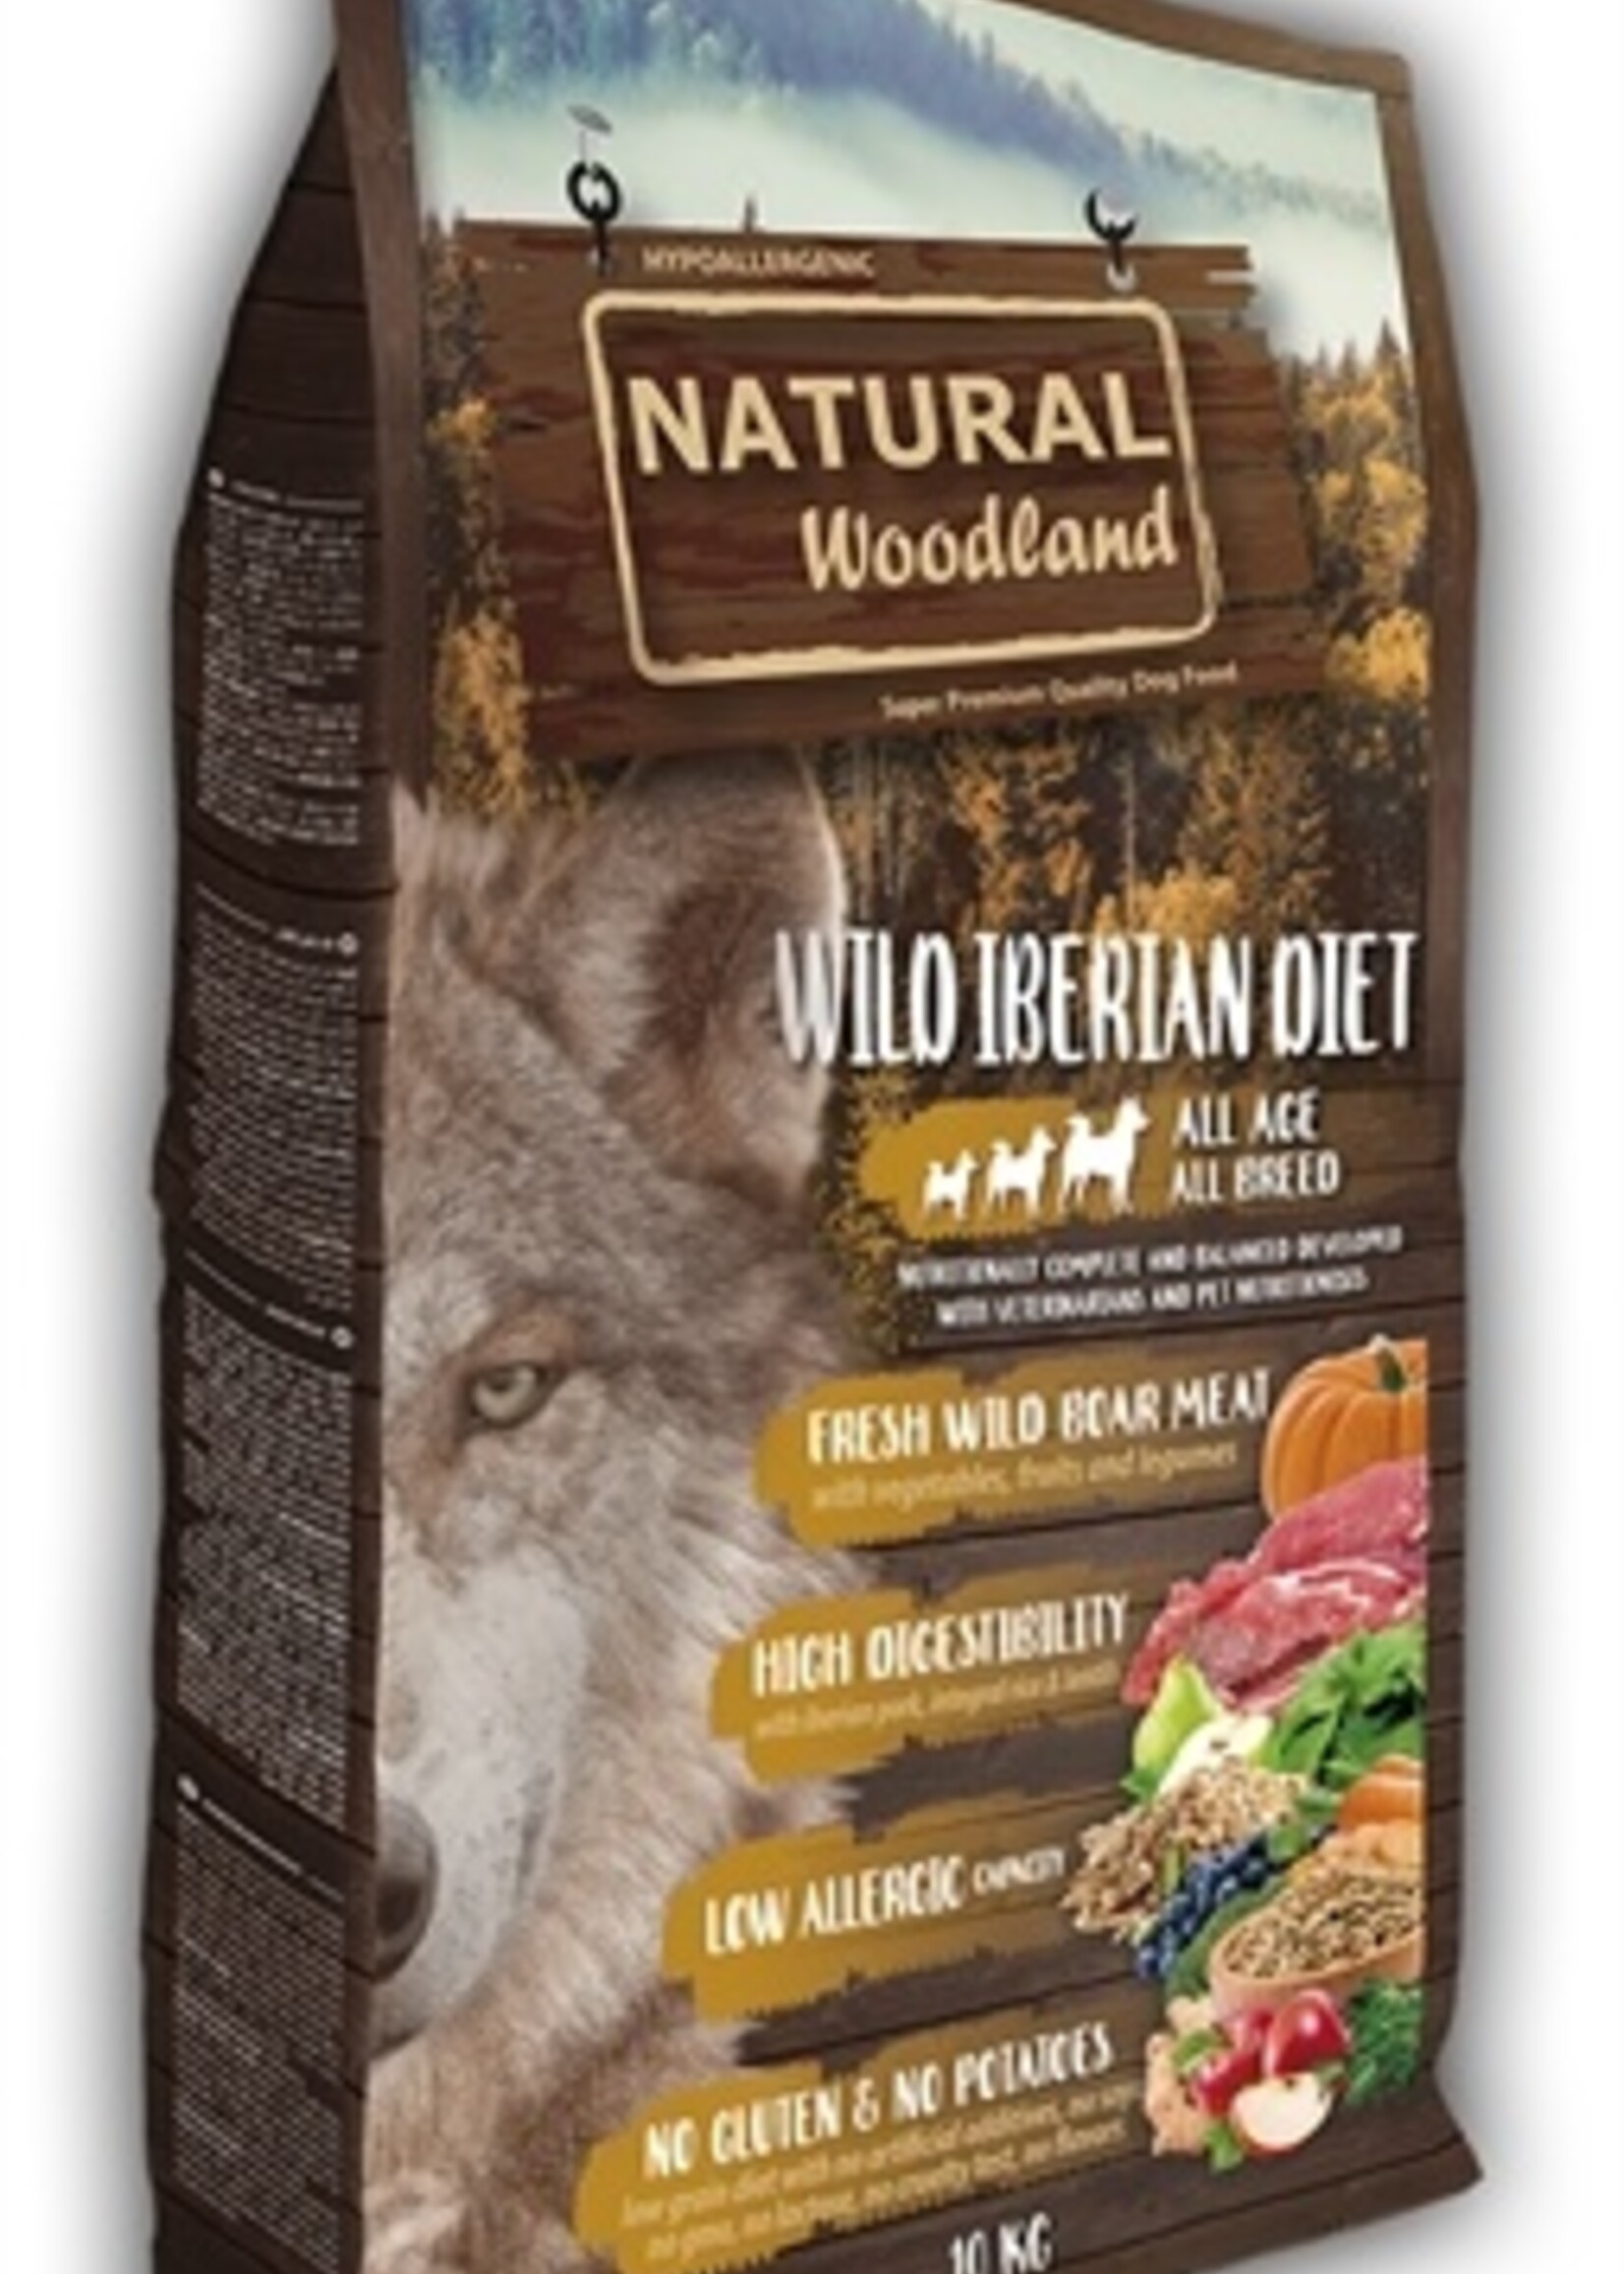 Natural woodland Natural woodland wild iberian diet